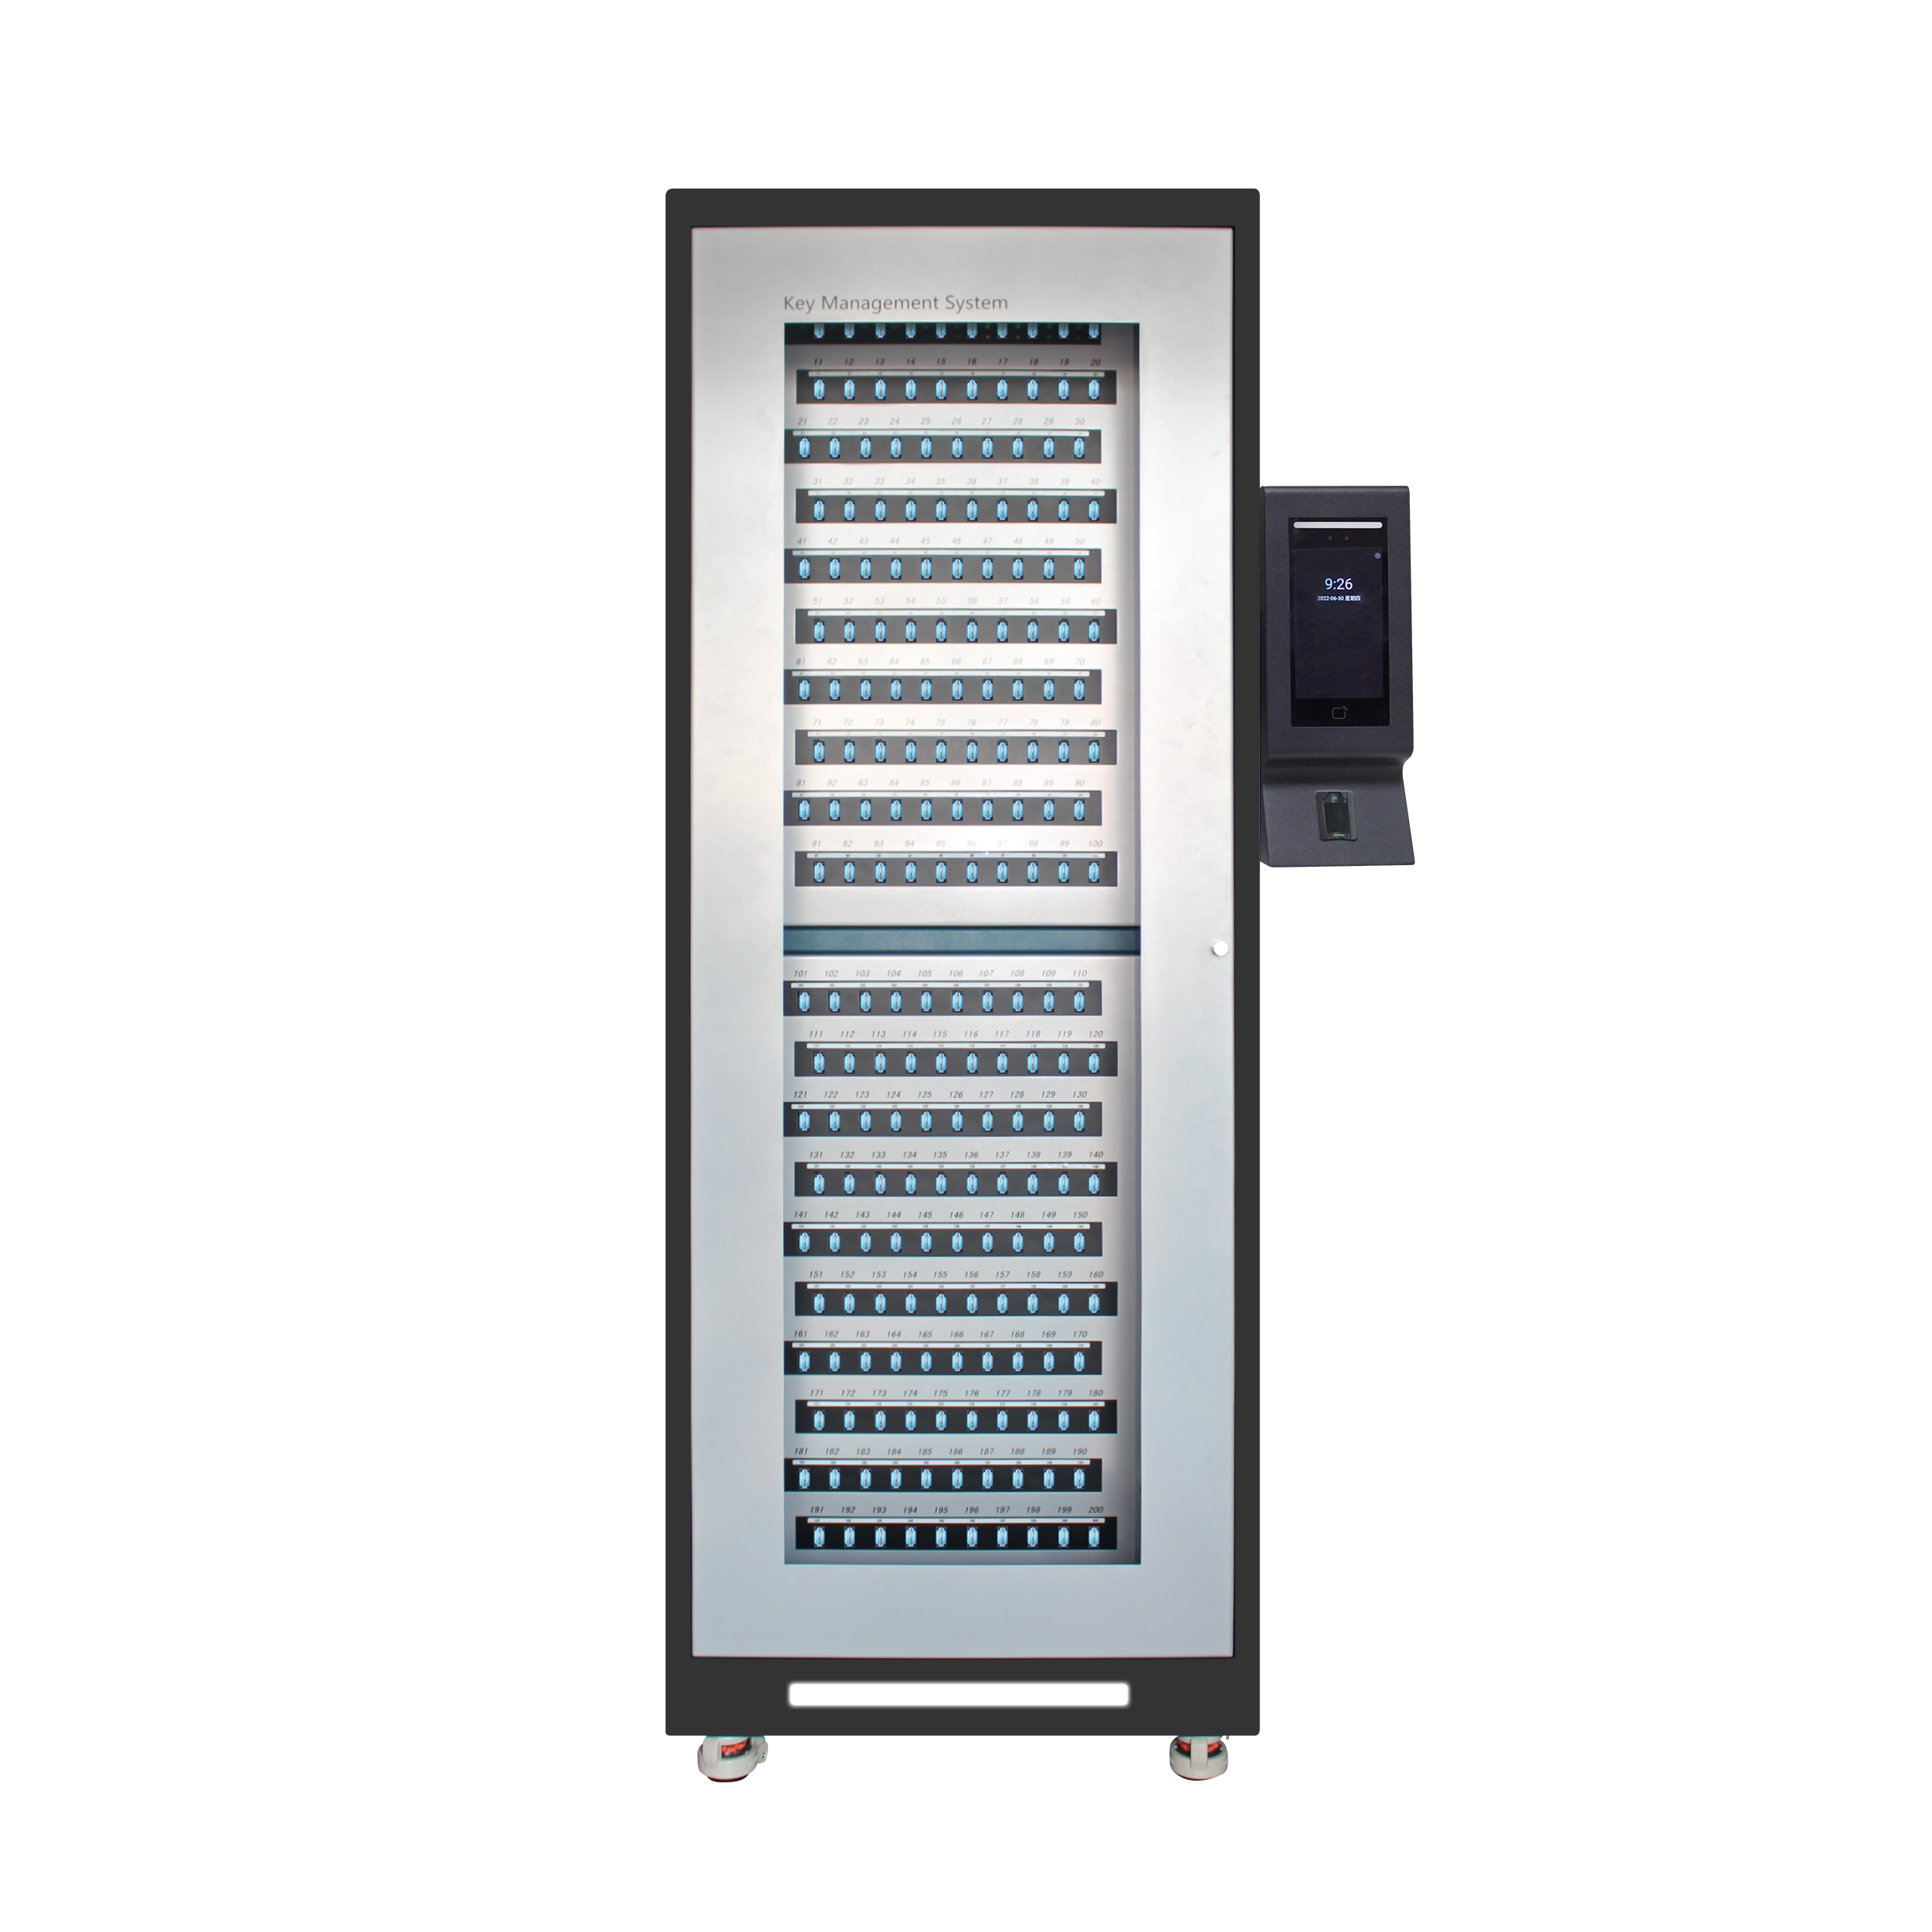 Landwell I-Keybox RFID ухаалаг түлхүүрийн удирдлагын систем RFID түлхүүрийн кабинет